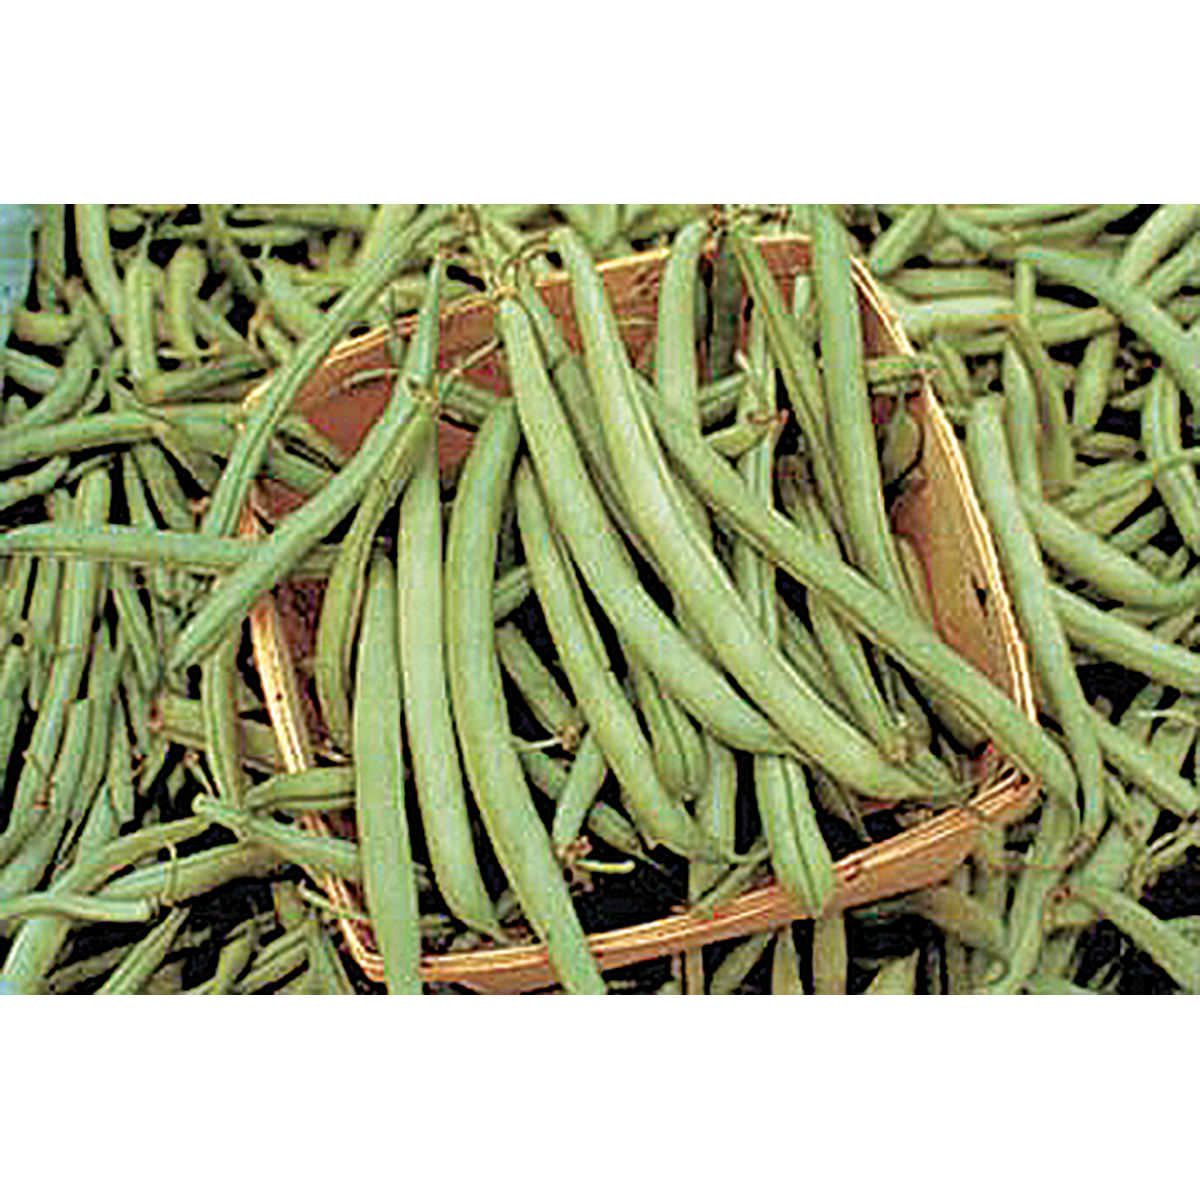 Tendergreen Improved Green Bush Bean Seeds